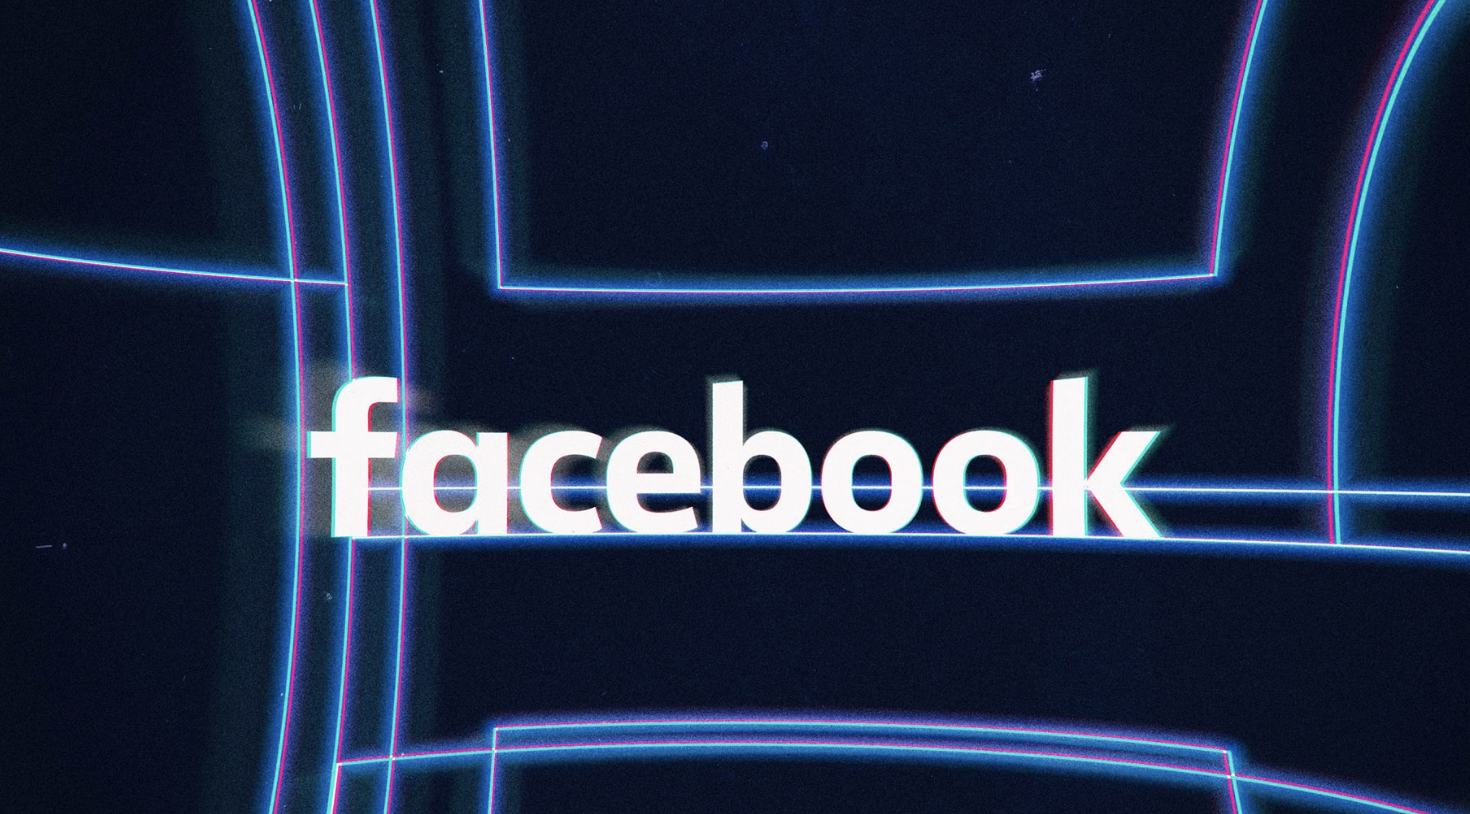 Facebook เริ่มทดสอบฟีเจอร์ใหม่เช็คได้ว่าเล่น Facebook ไปนานเท่าไหร่แล้ว